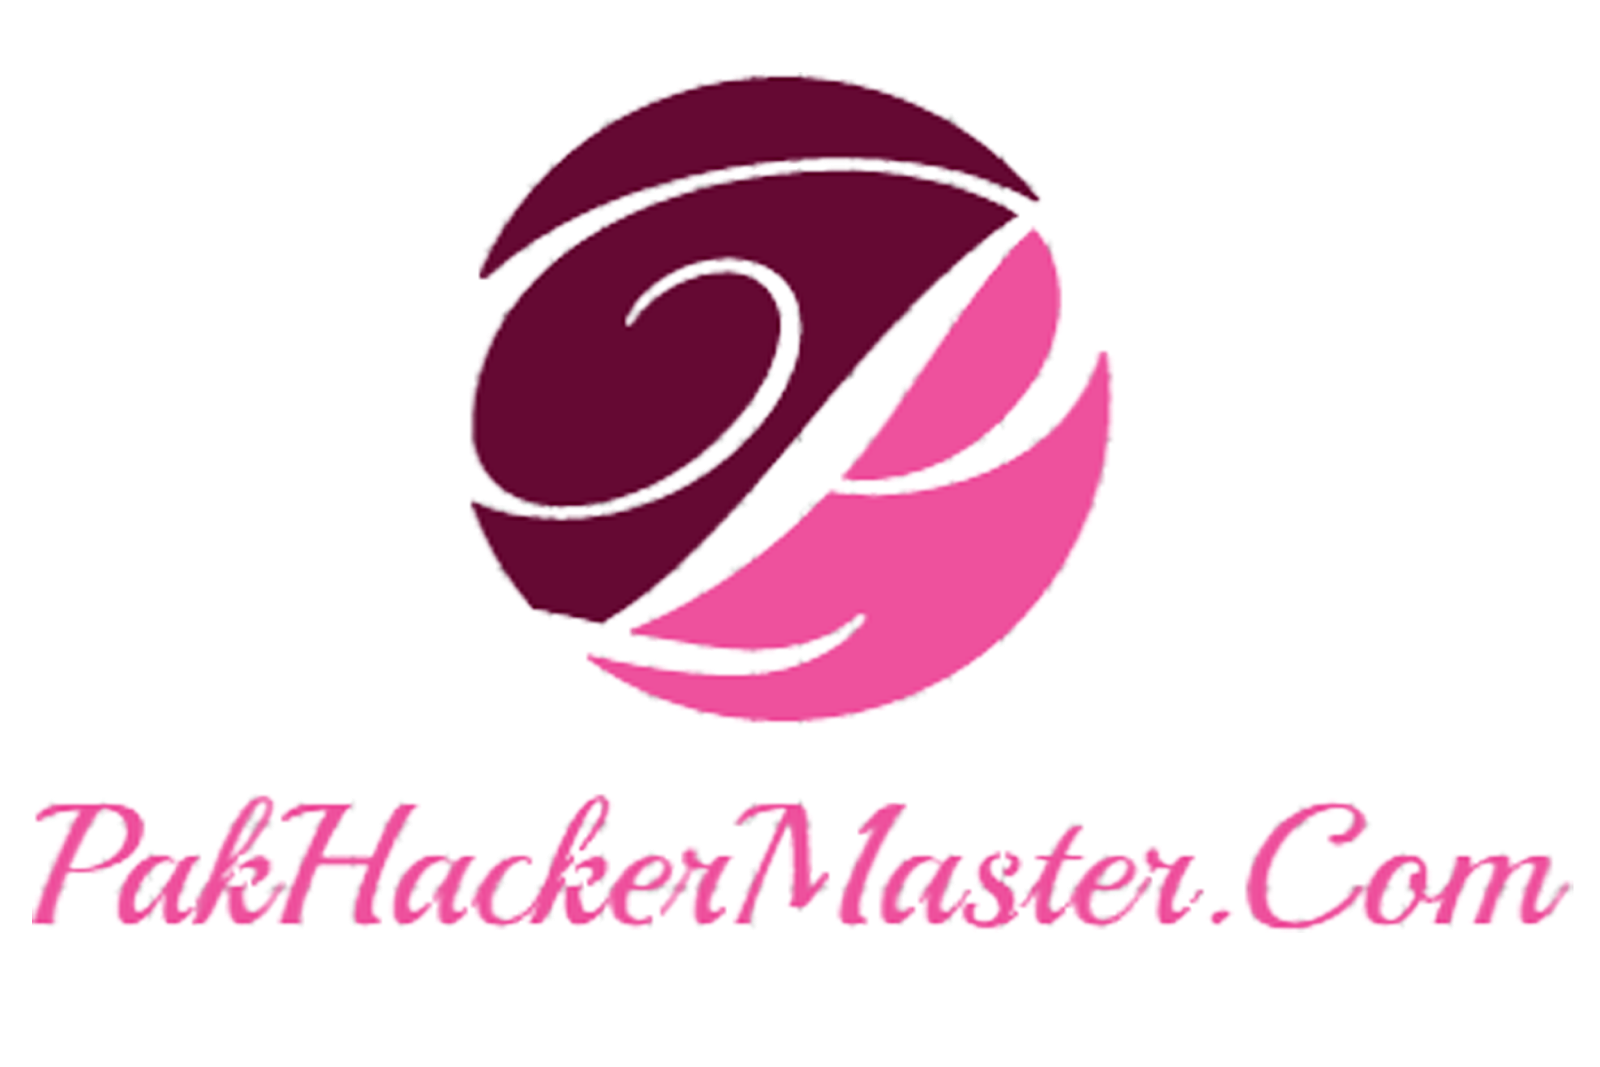 Pak Hacker Master | All Hacking Tips And All Hacking Coruse